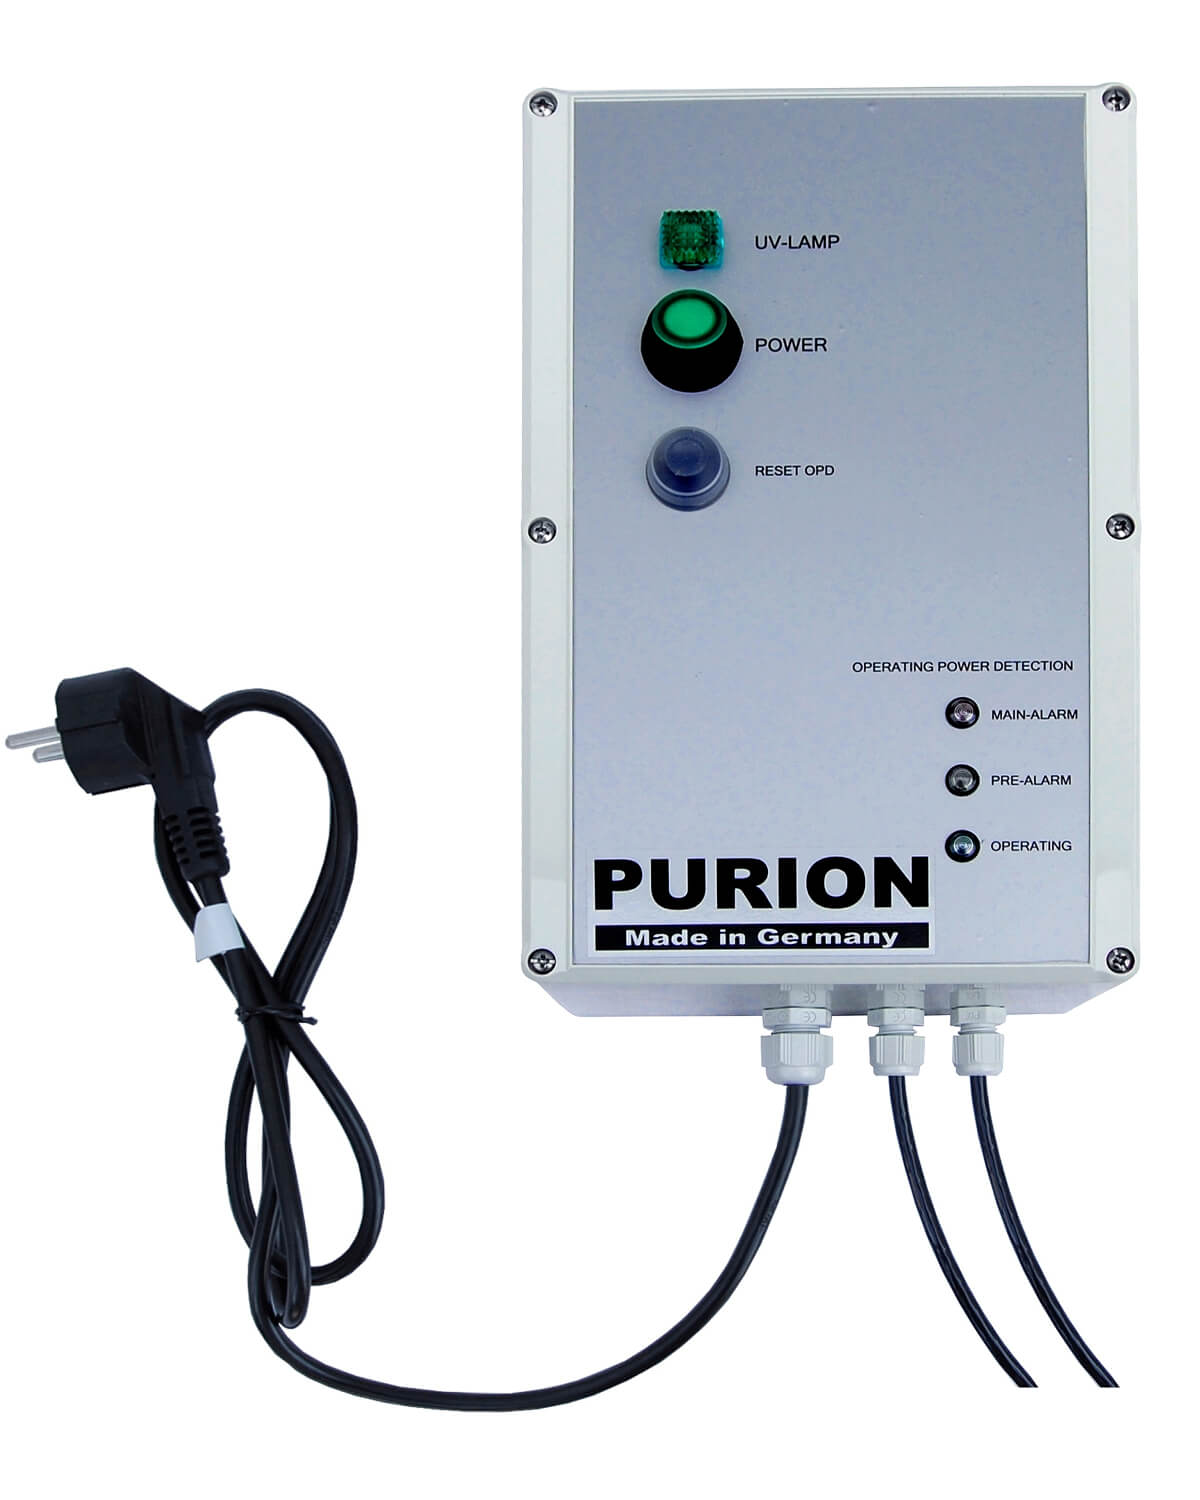 PURION 2501 OPD Extra UV-C-Desinfektion der PURION GmbH.